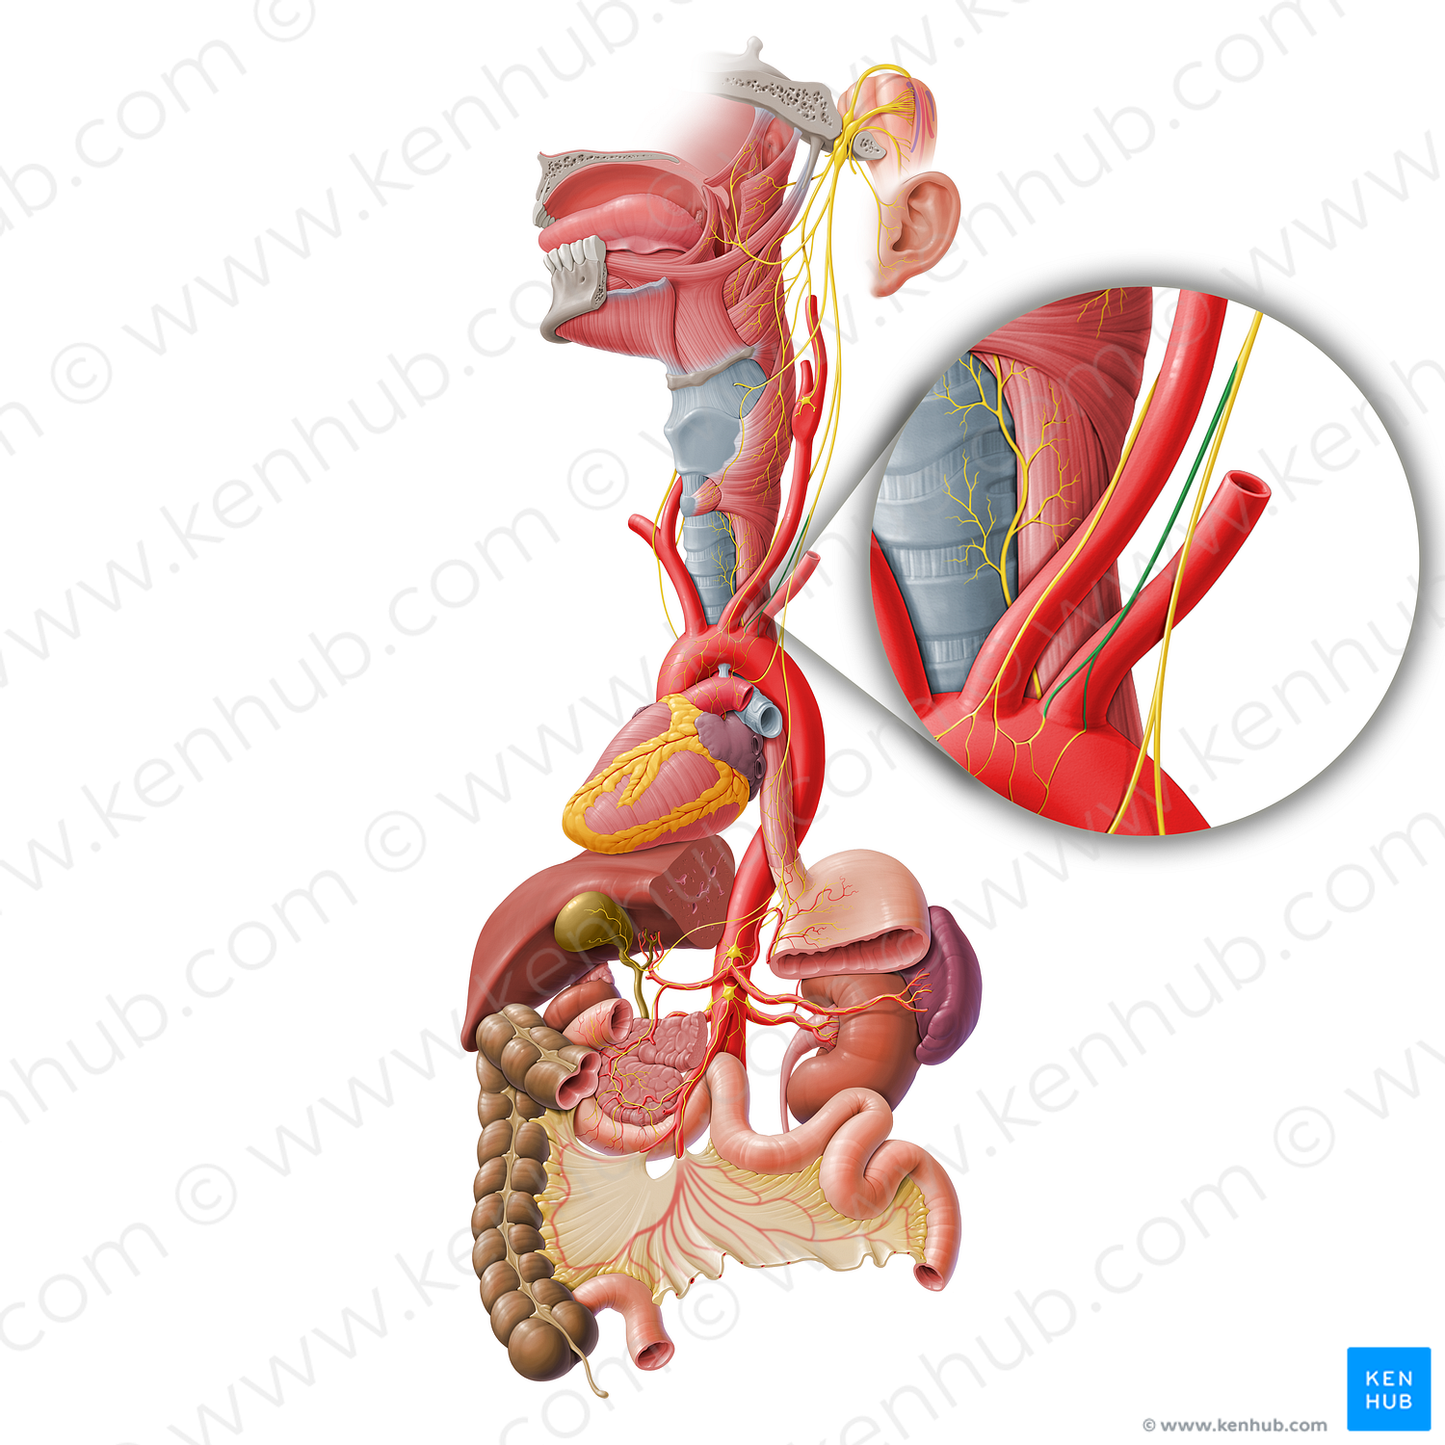 Inferior cervical cardiac branch of vagus nerve (#6350)